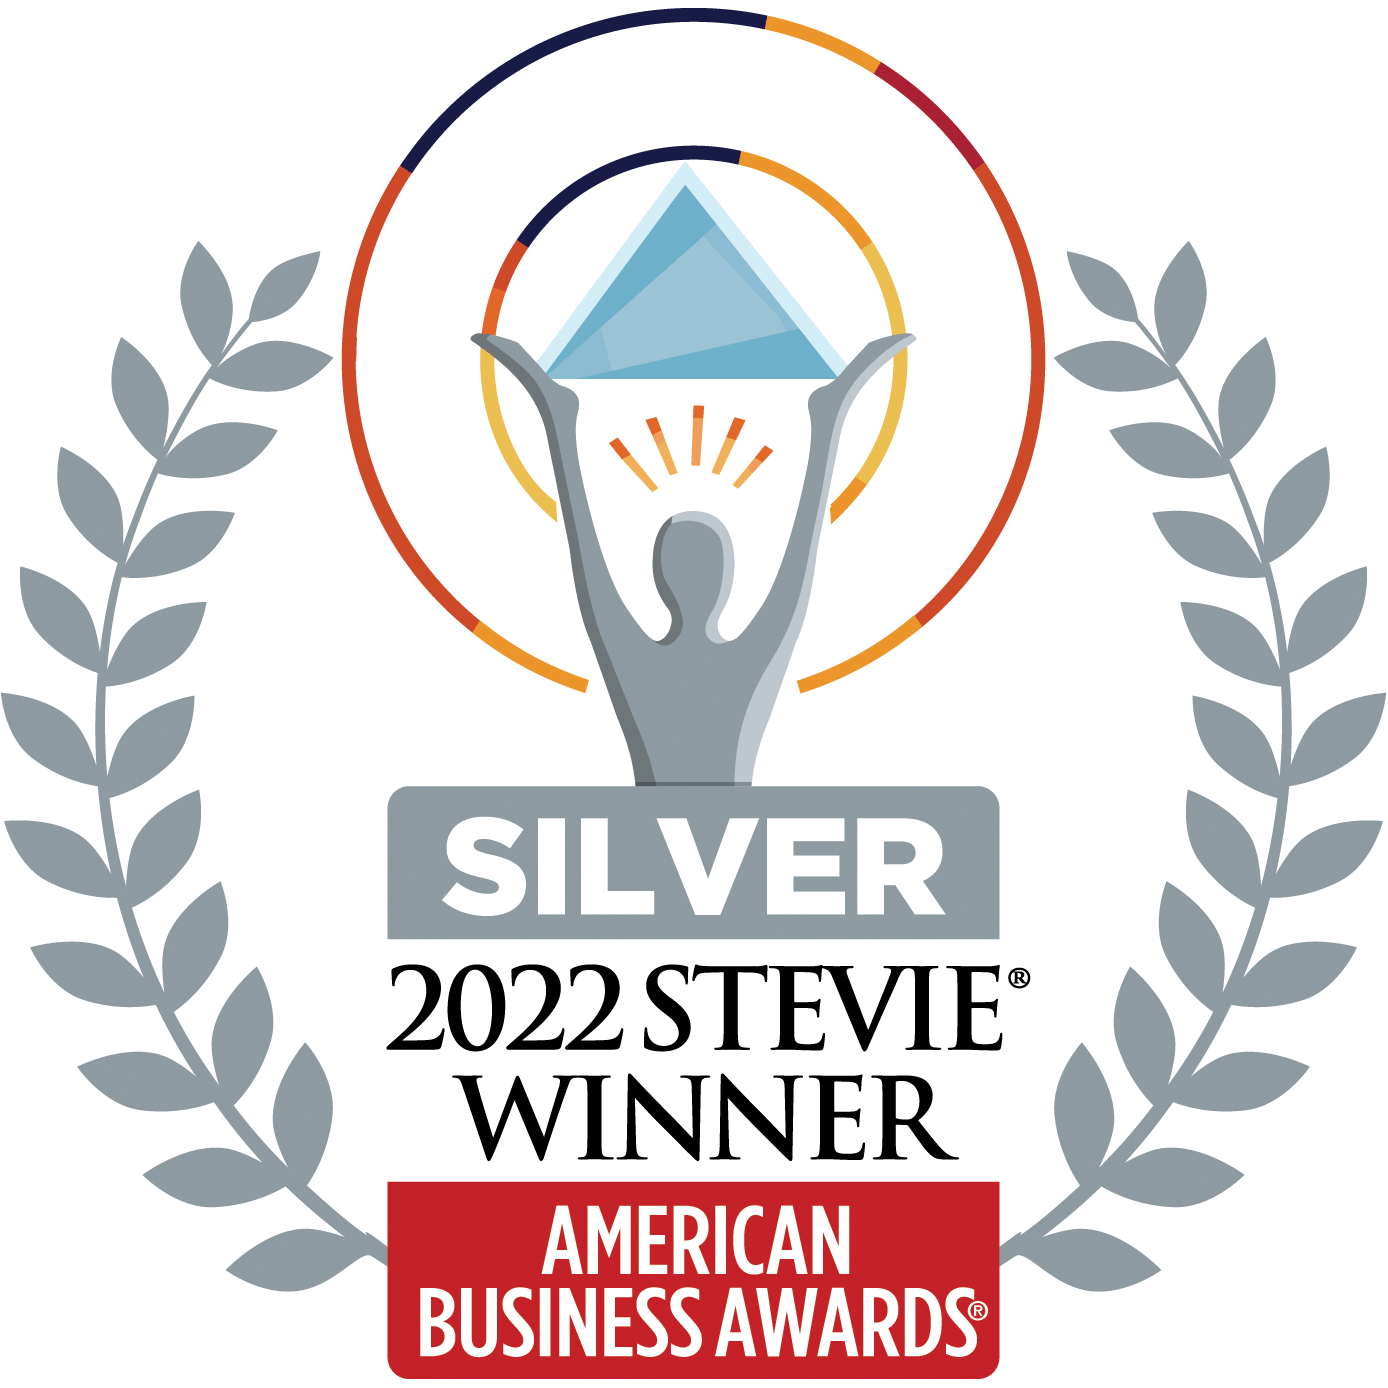 American Business Awards silver stevie award